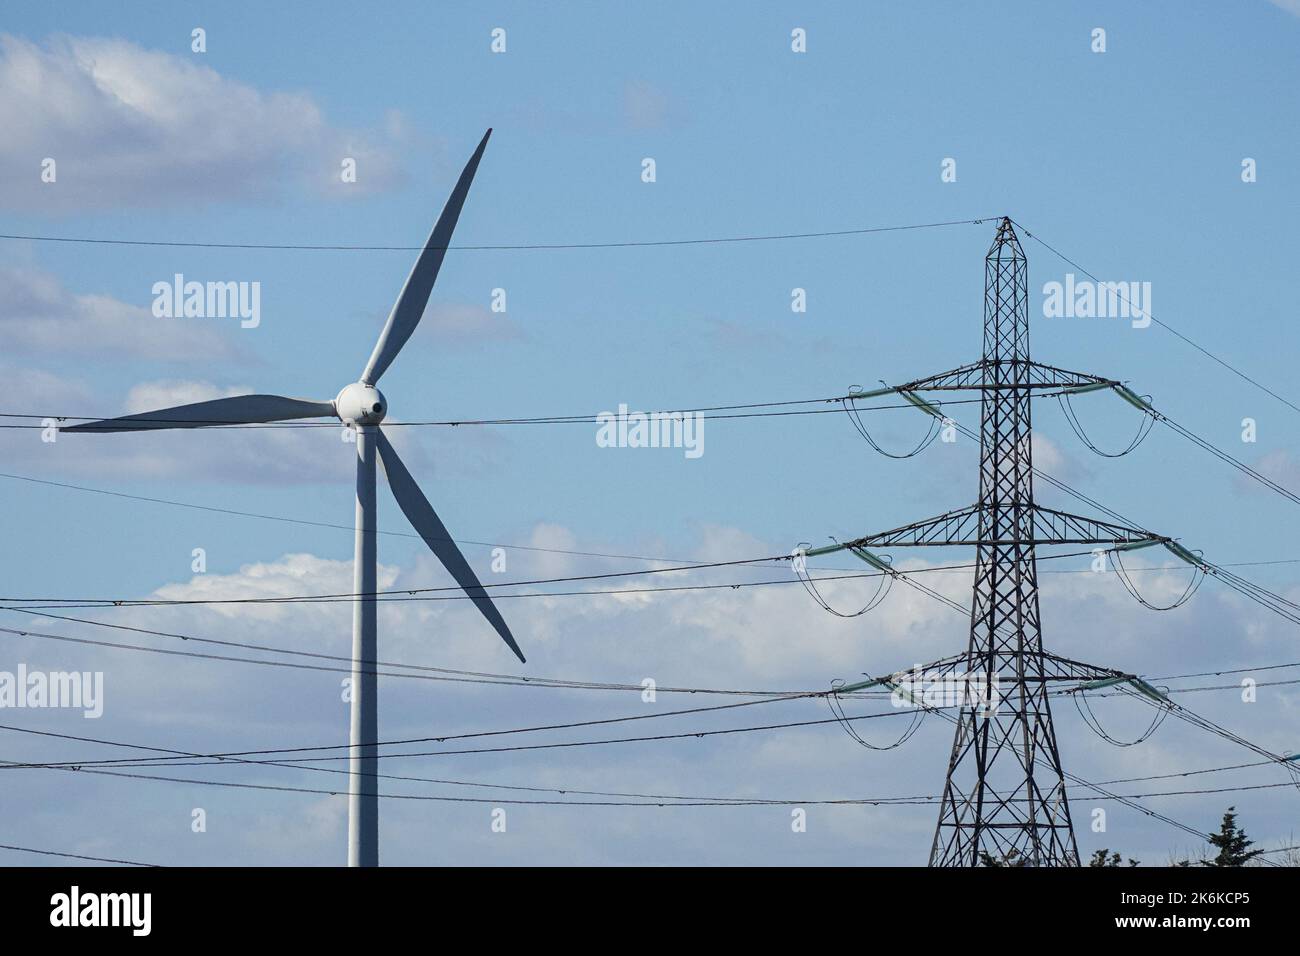 Wind turbine and electricity pylon on blue sky background Stock Photo